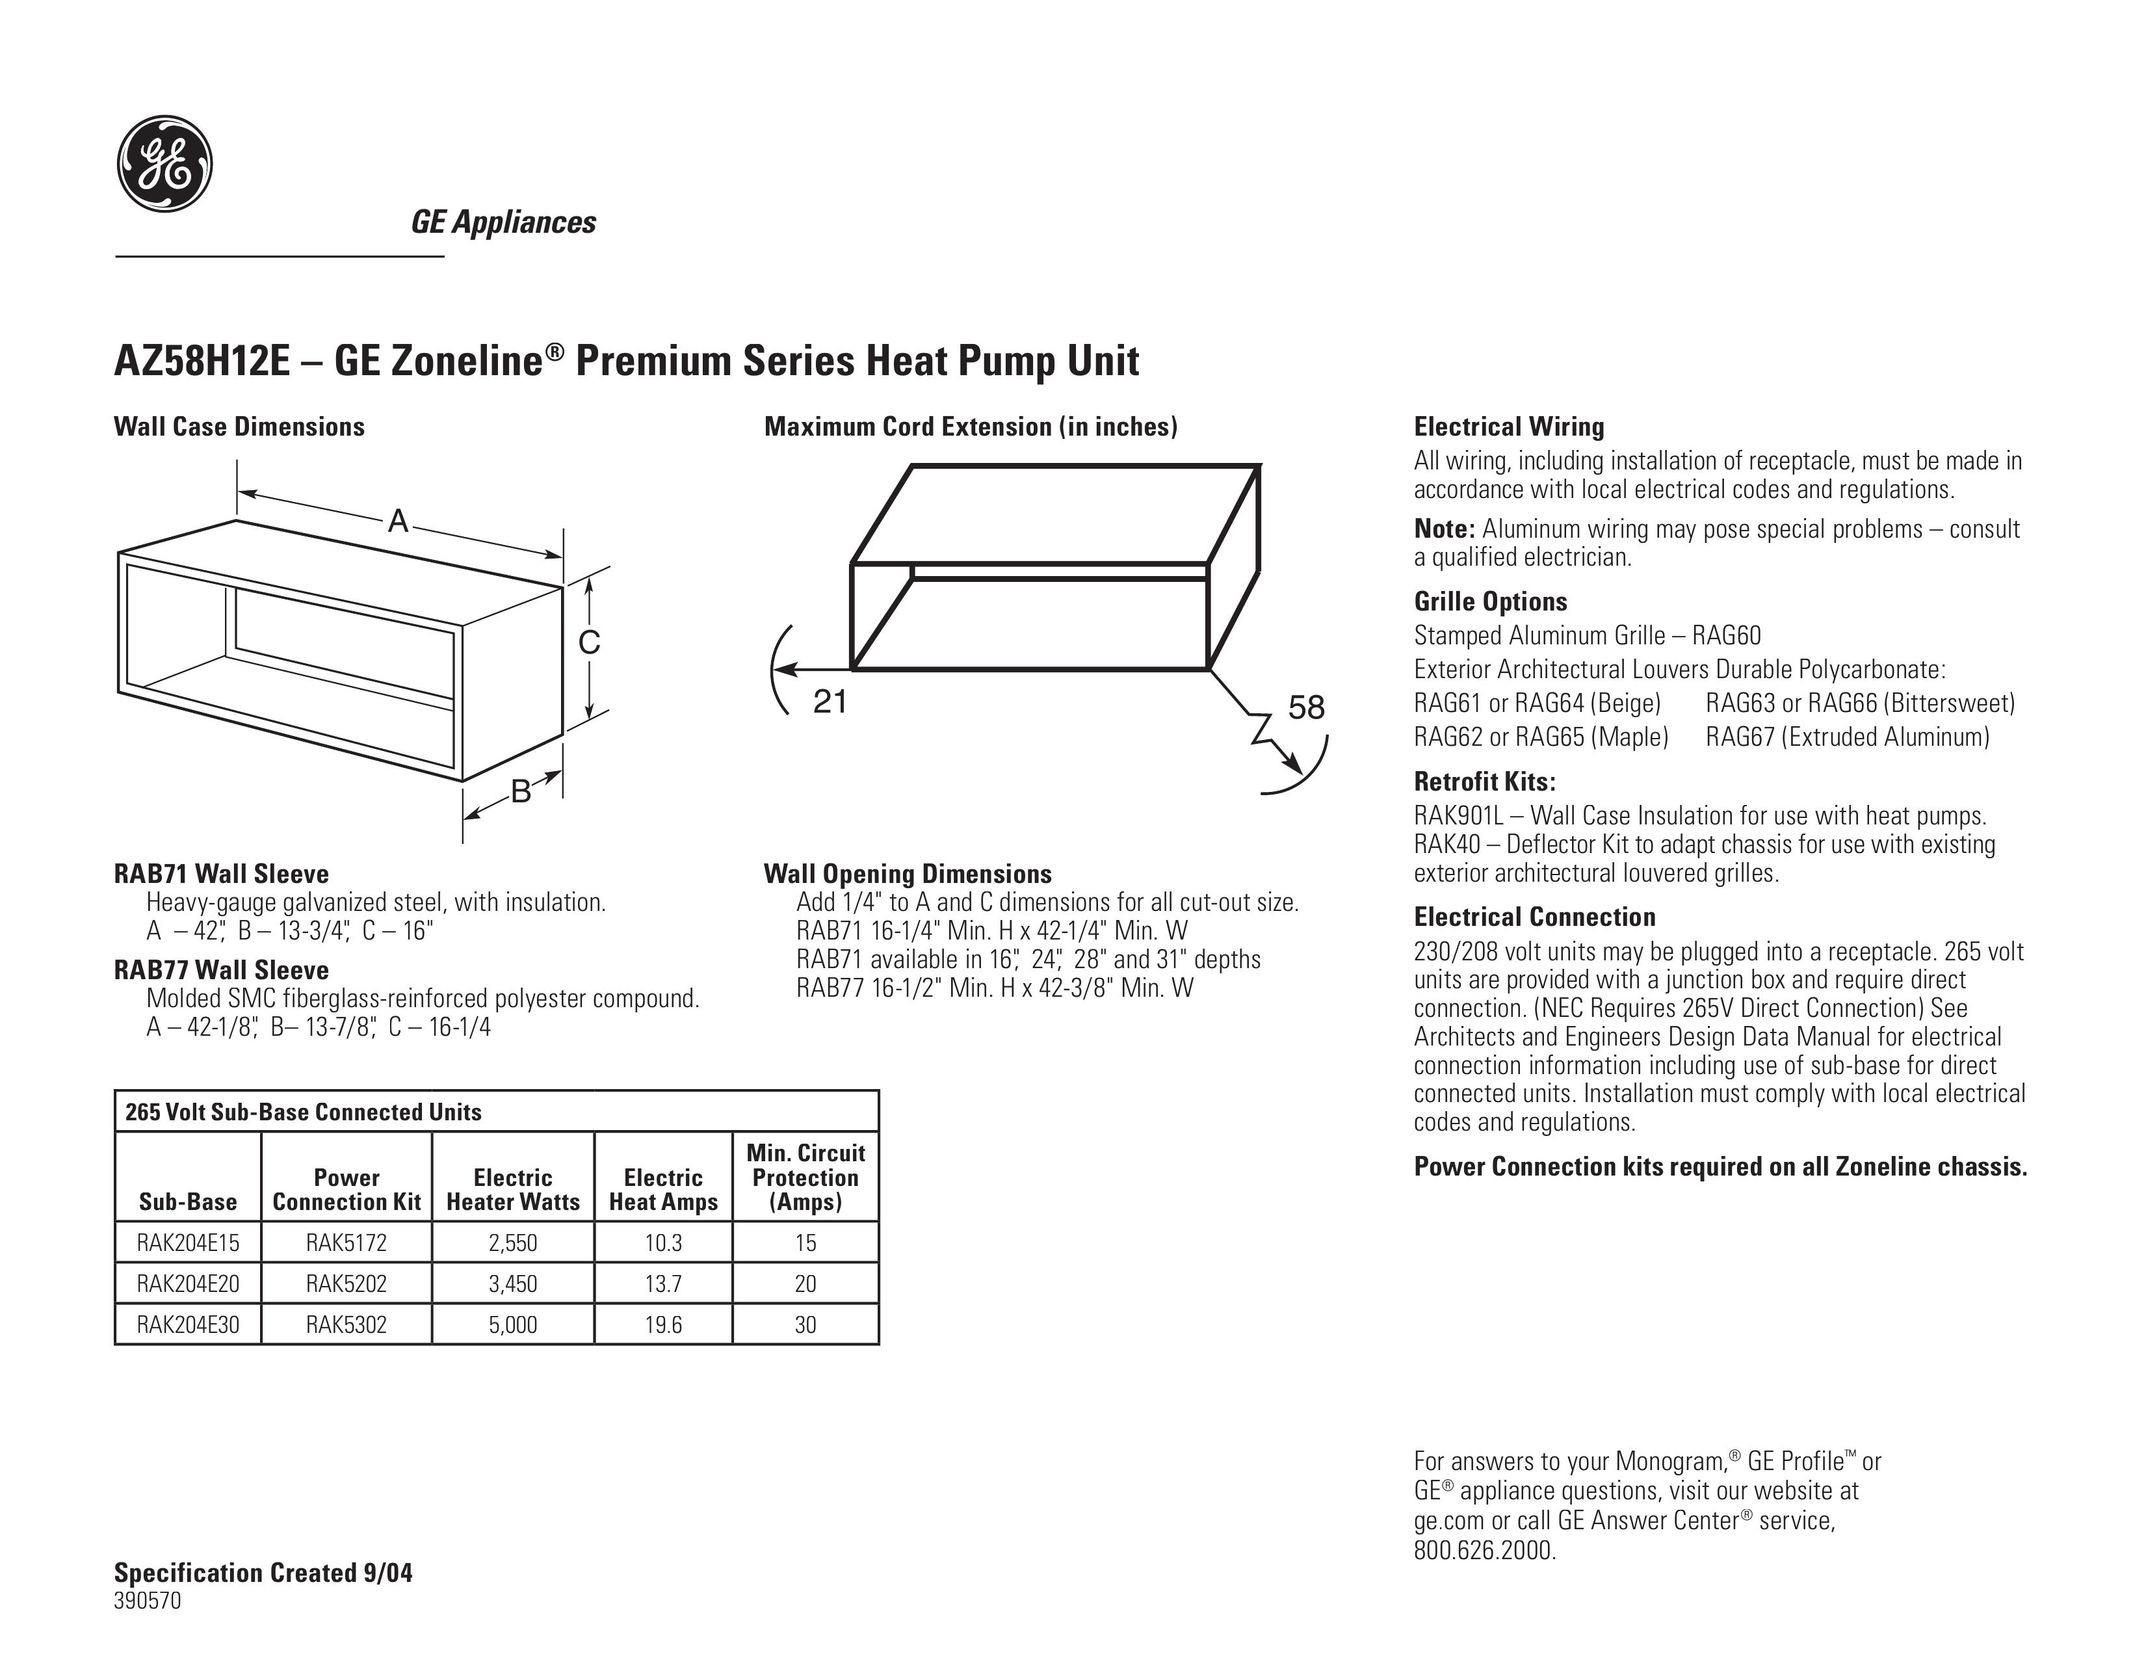 GE AZ58H12EAC Heat Pump User Manual